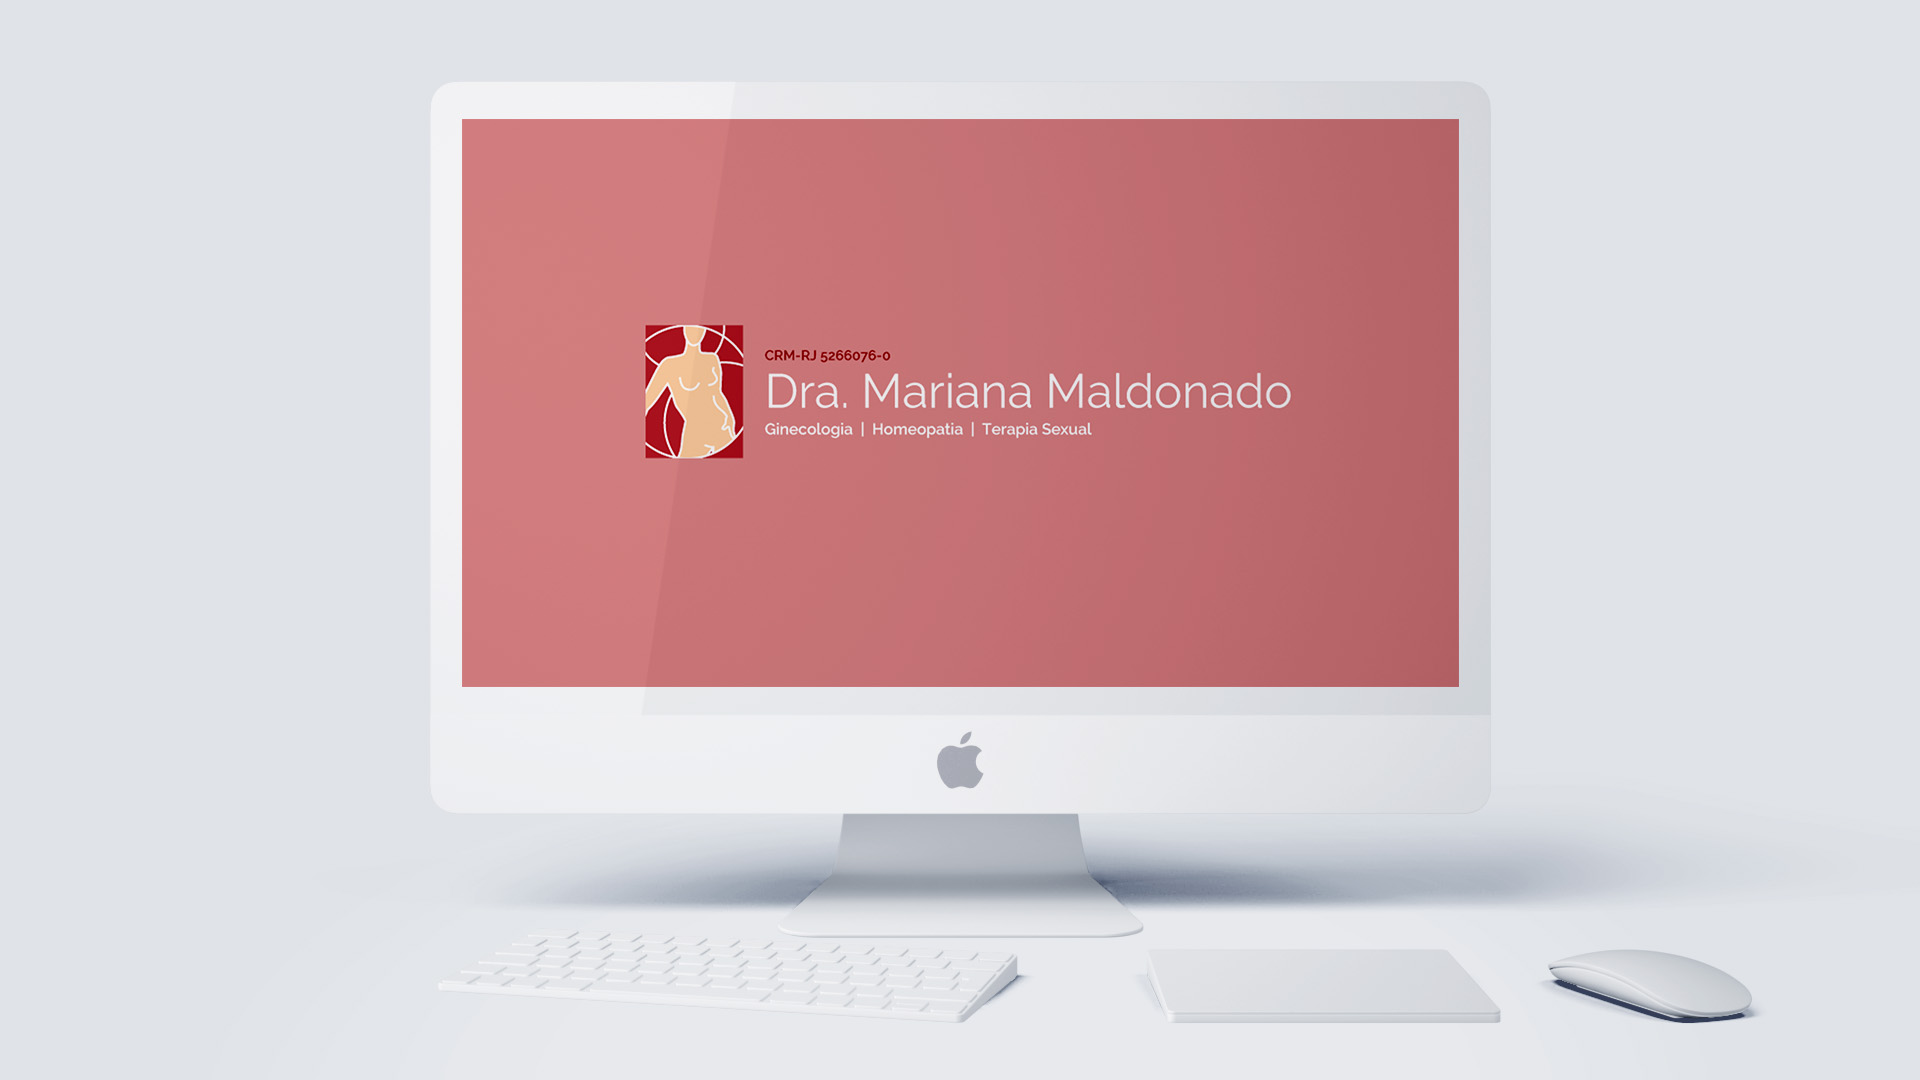 Dra. Mariana Maldonado